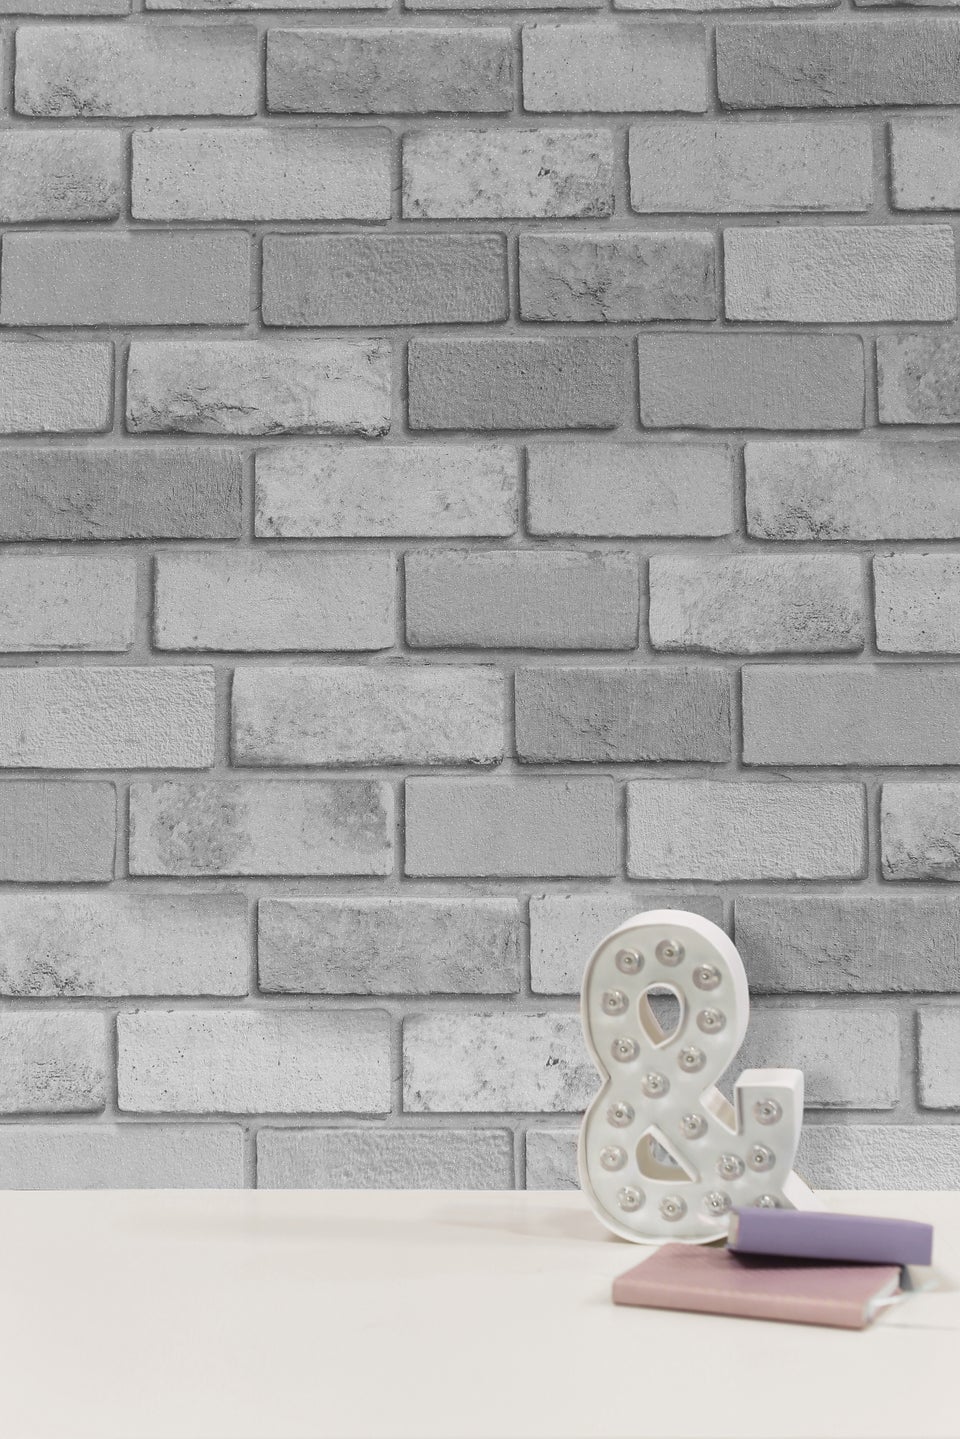 Arthouse Diamond Brick Wallpaper